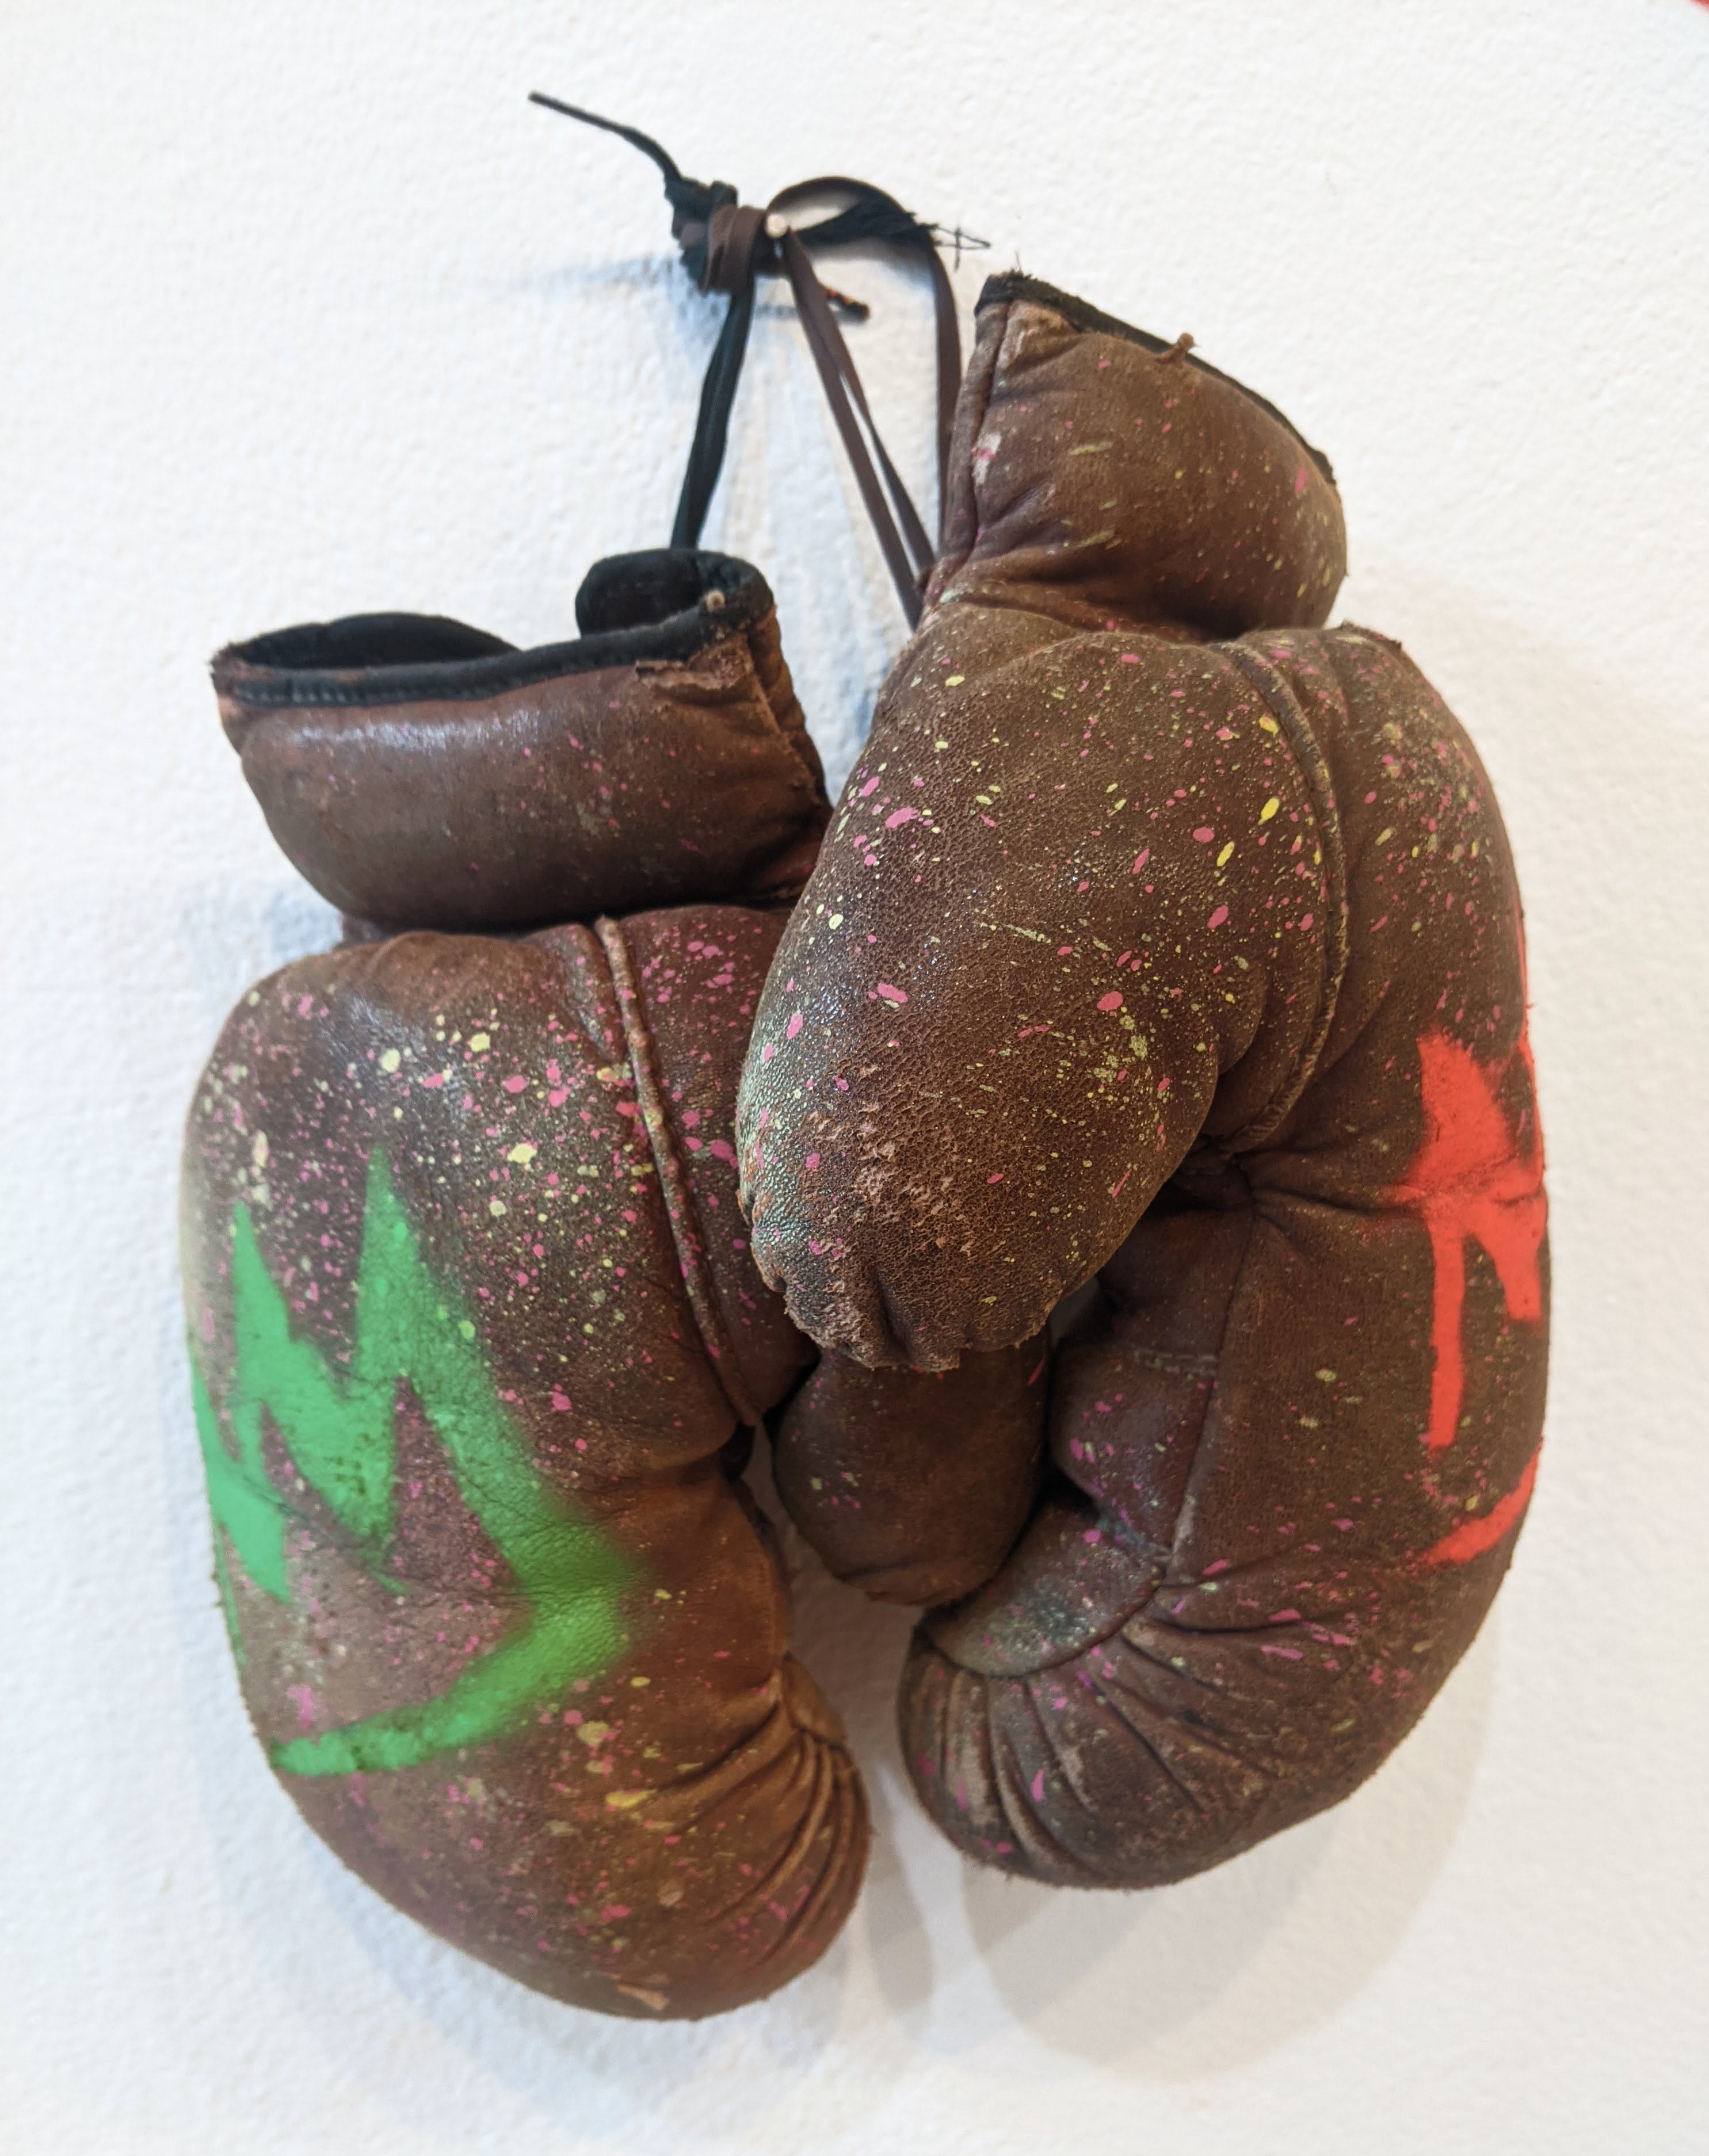 "Vintage Boxing Gloves 4" by JC Rivera